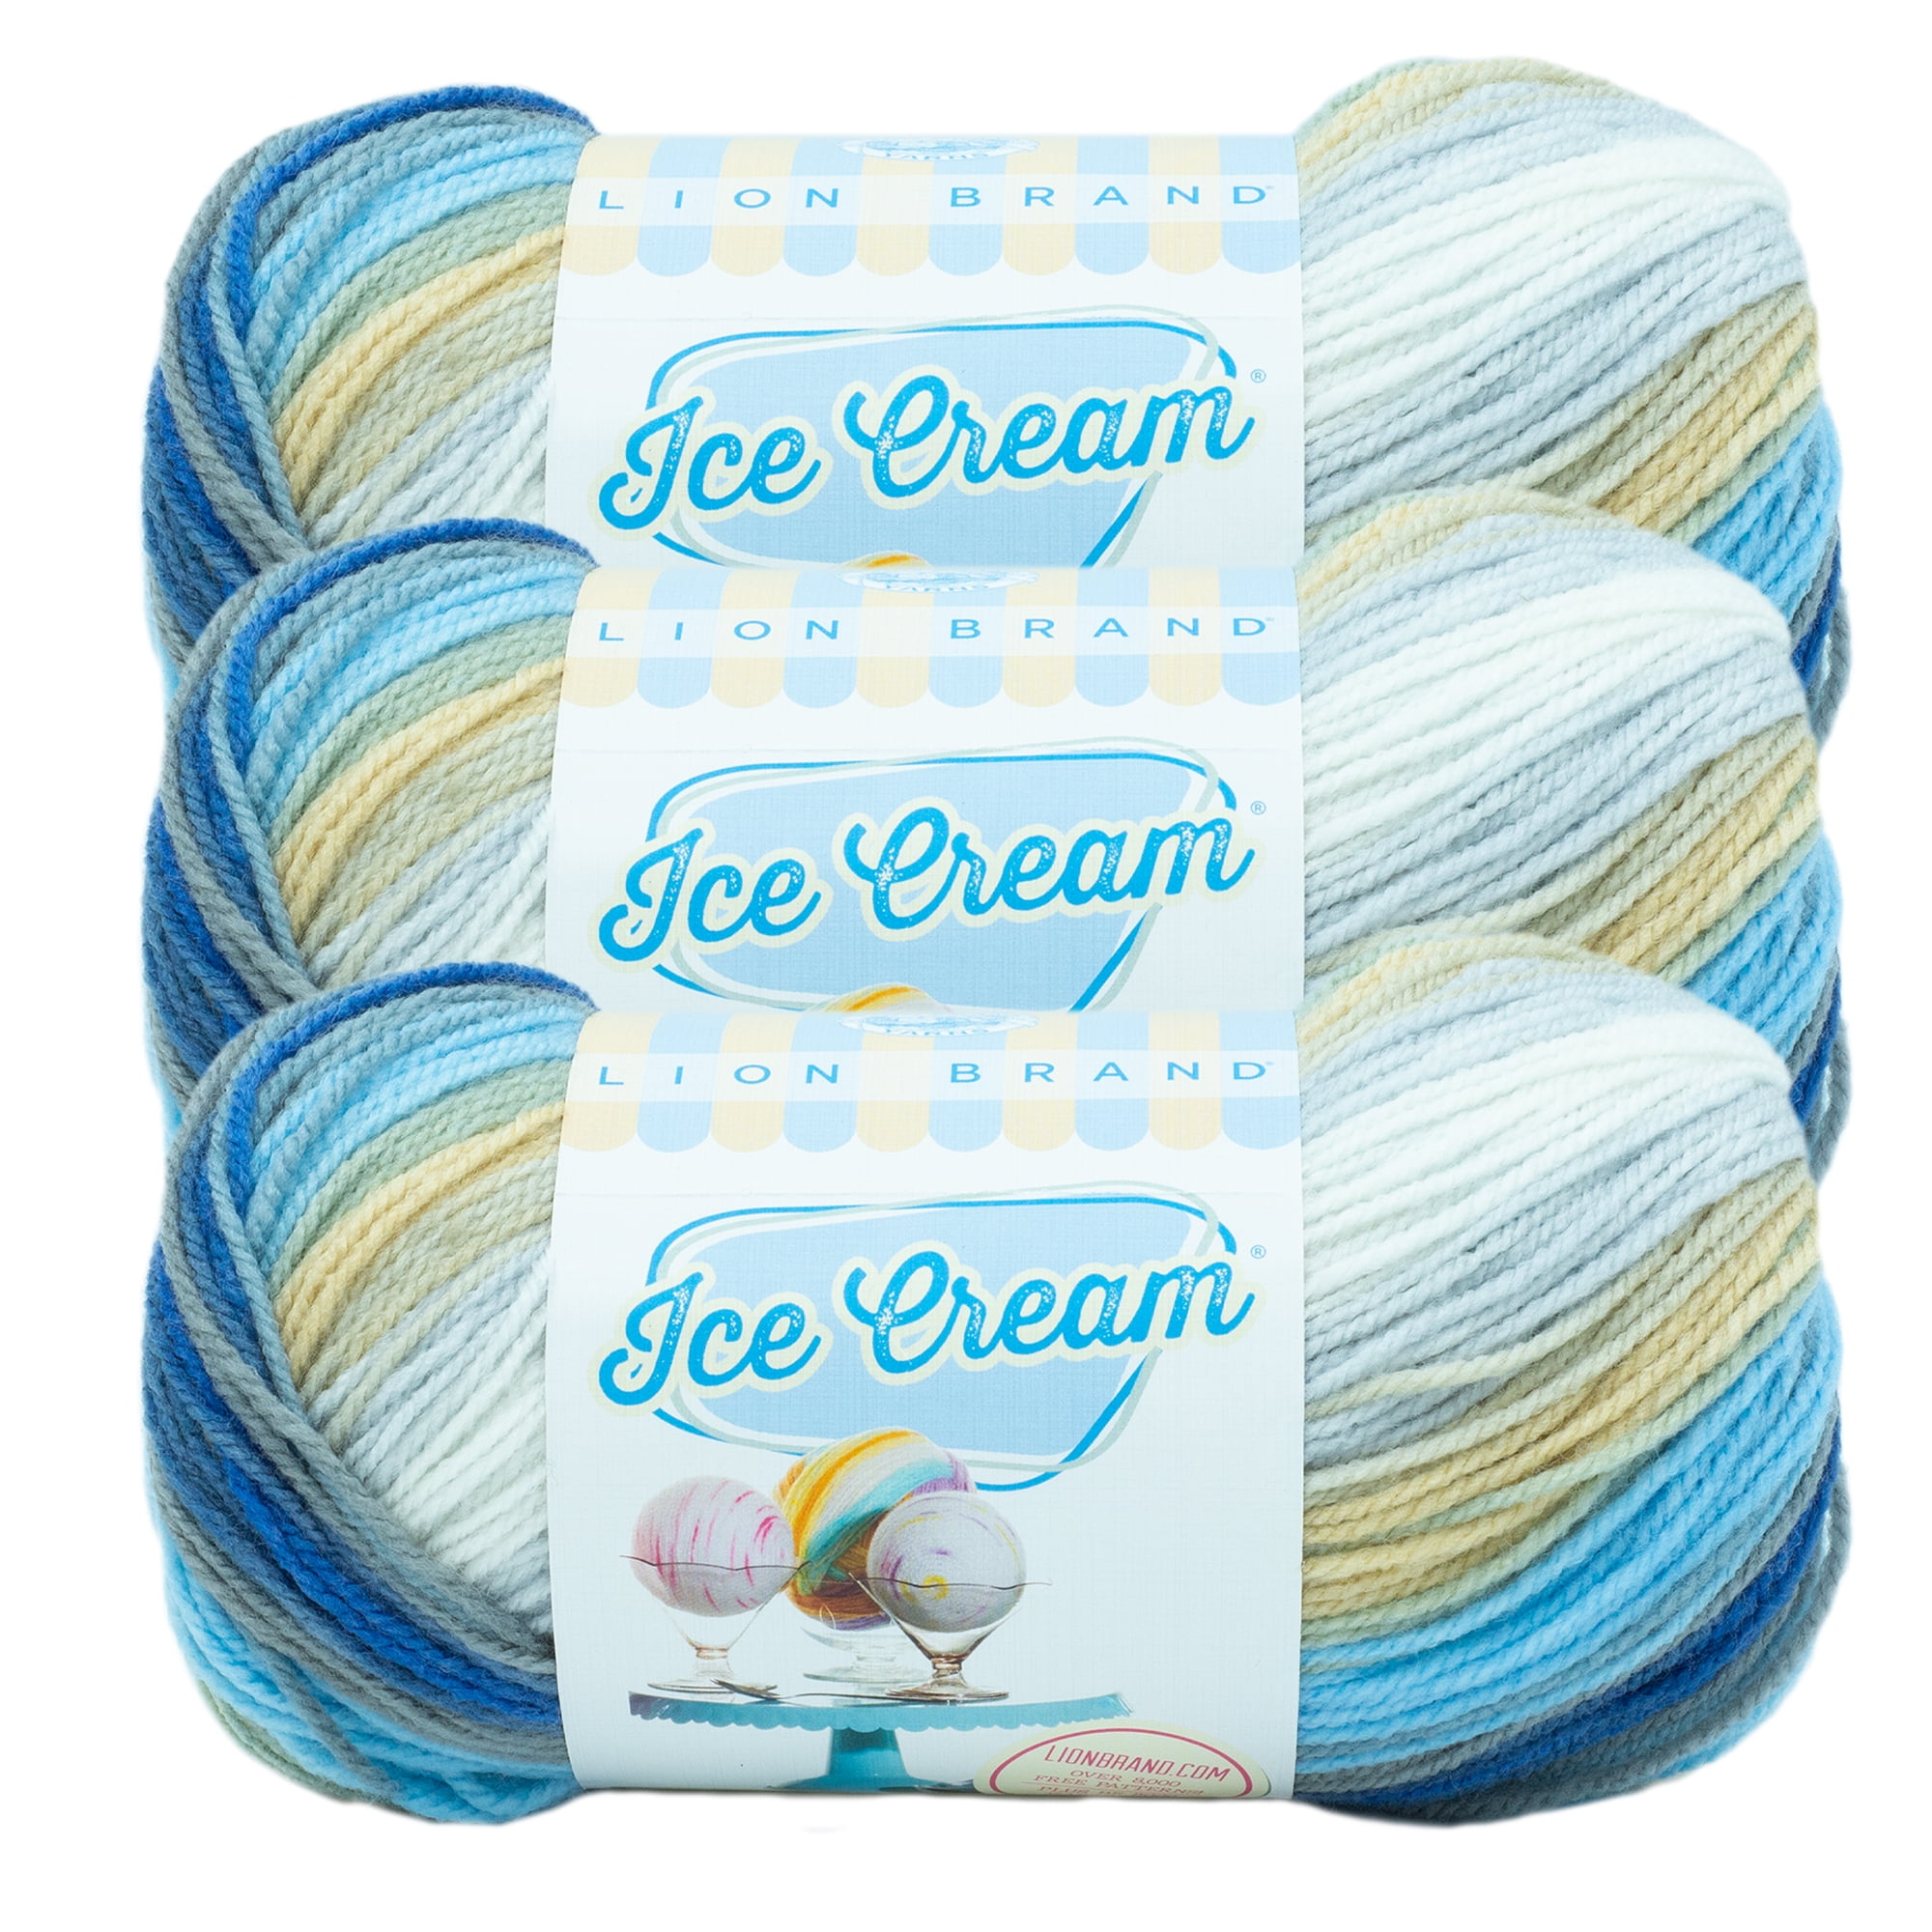 Lion Brand Yarn Ice Cream Blue Moon Light Acrylic Multi-color Yarn 3 Pack 